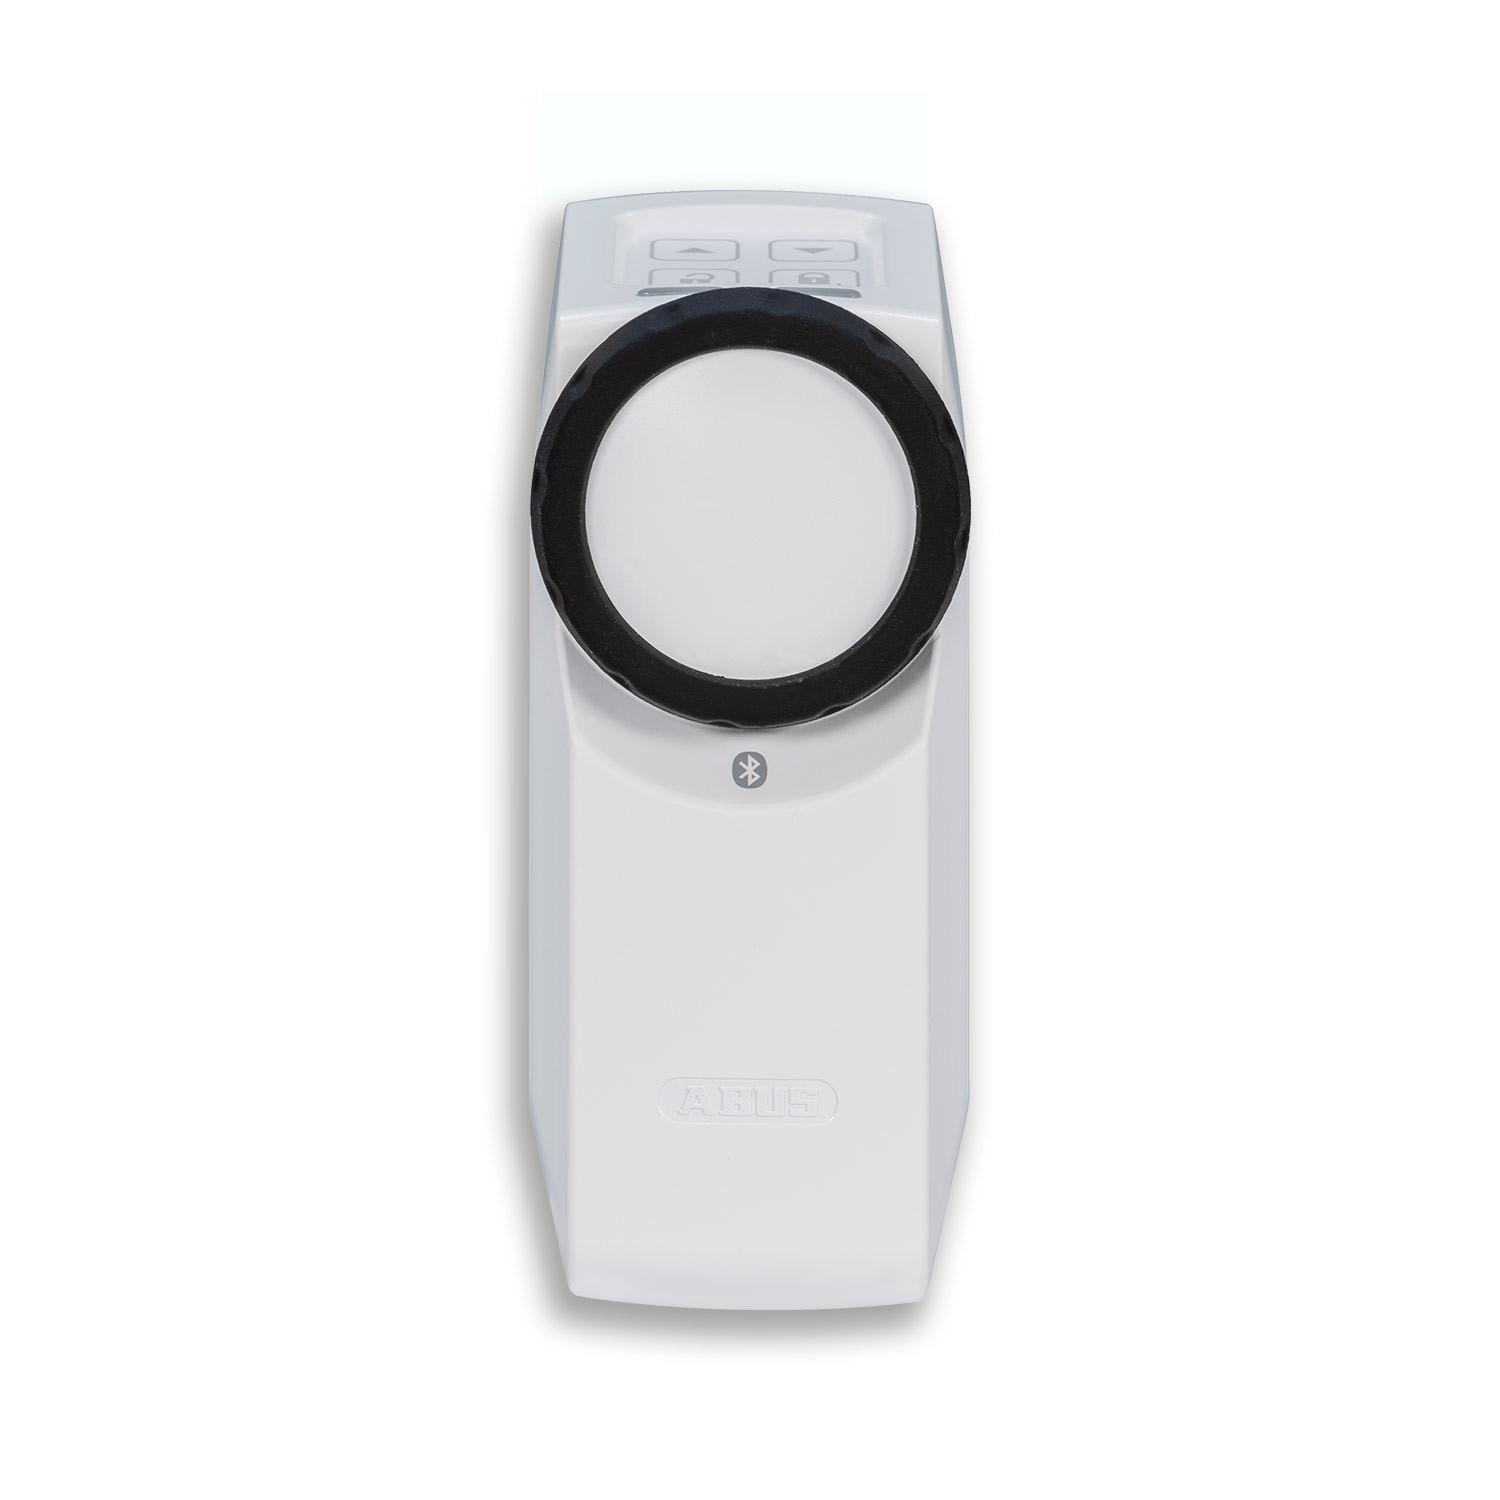 HomeTec Pro Bluetooth-Türschlossantrieb CFA3100 - weiß